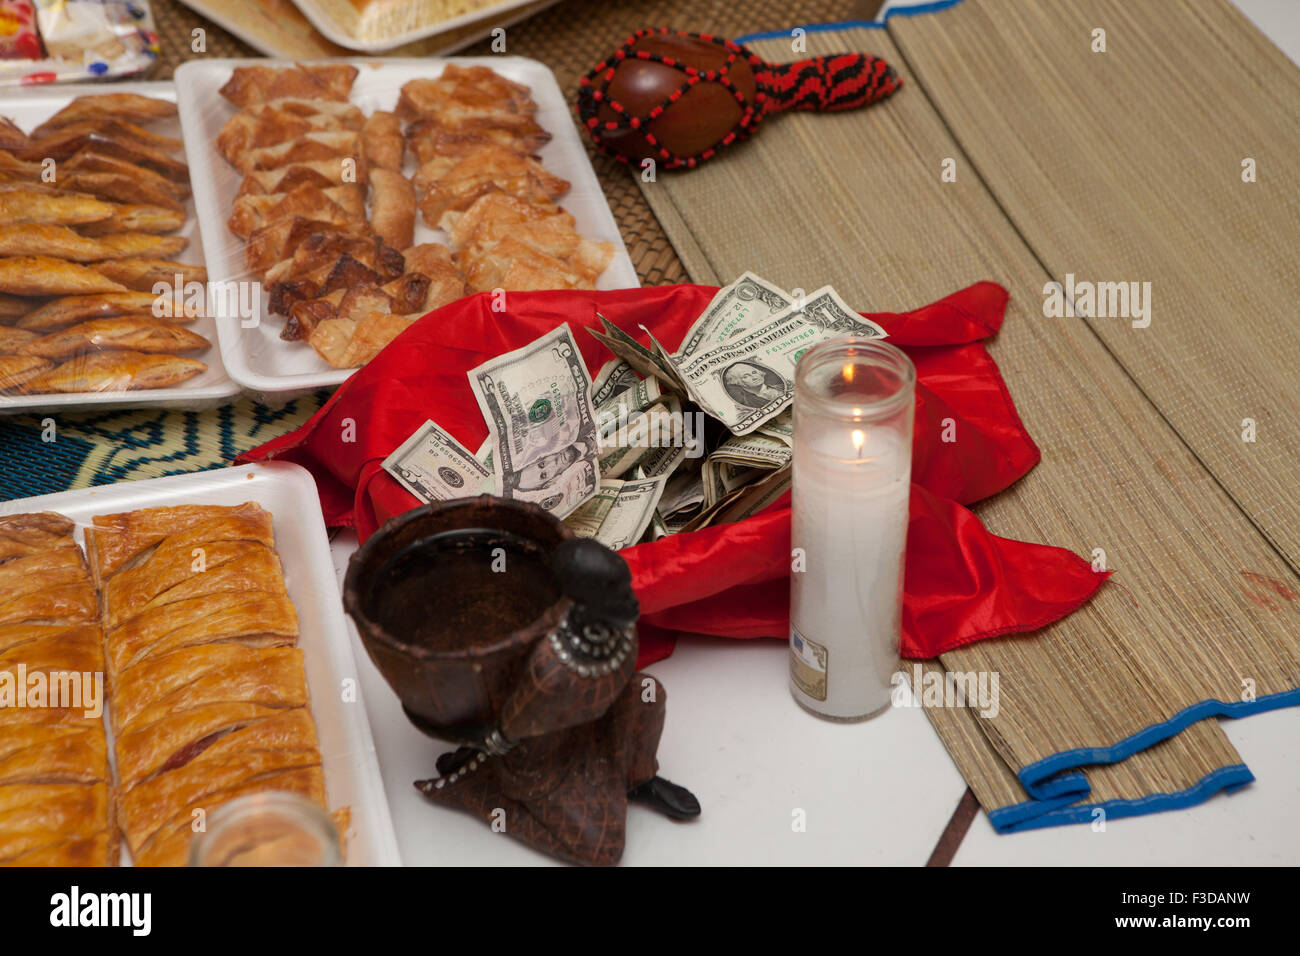 Offerta religiosa Santeria Orula Babalawo denaro, candela, guaiava pastello, Pastelito cubano Foto Stock